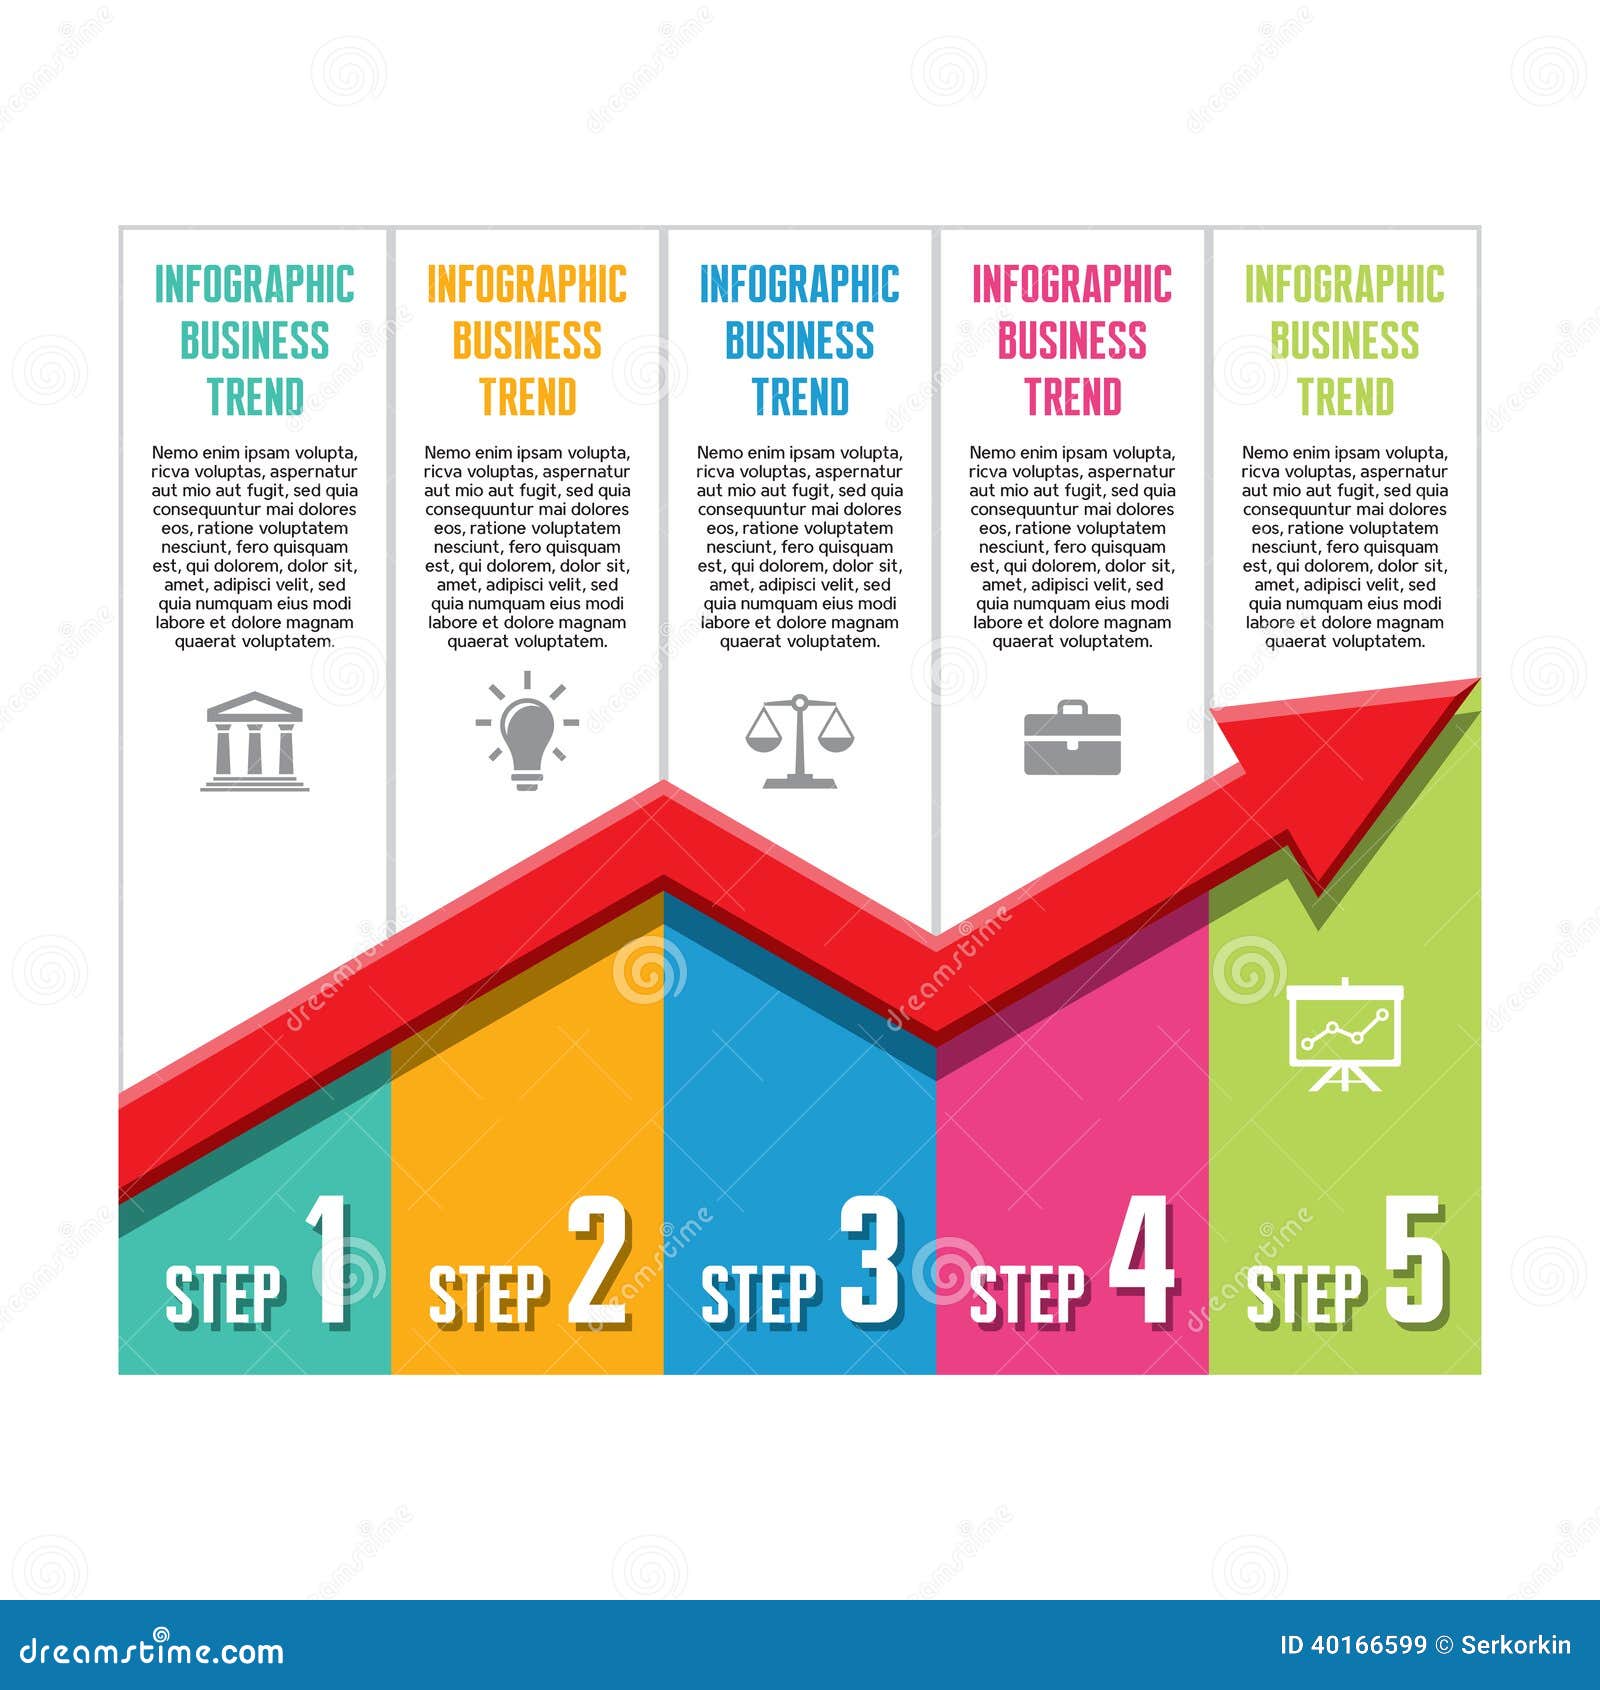 infographic business concept - trend  illust